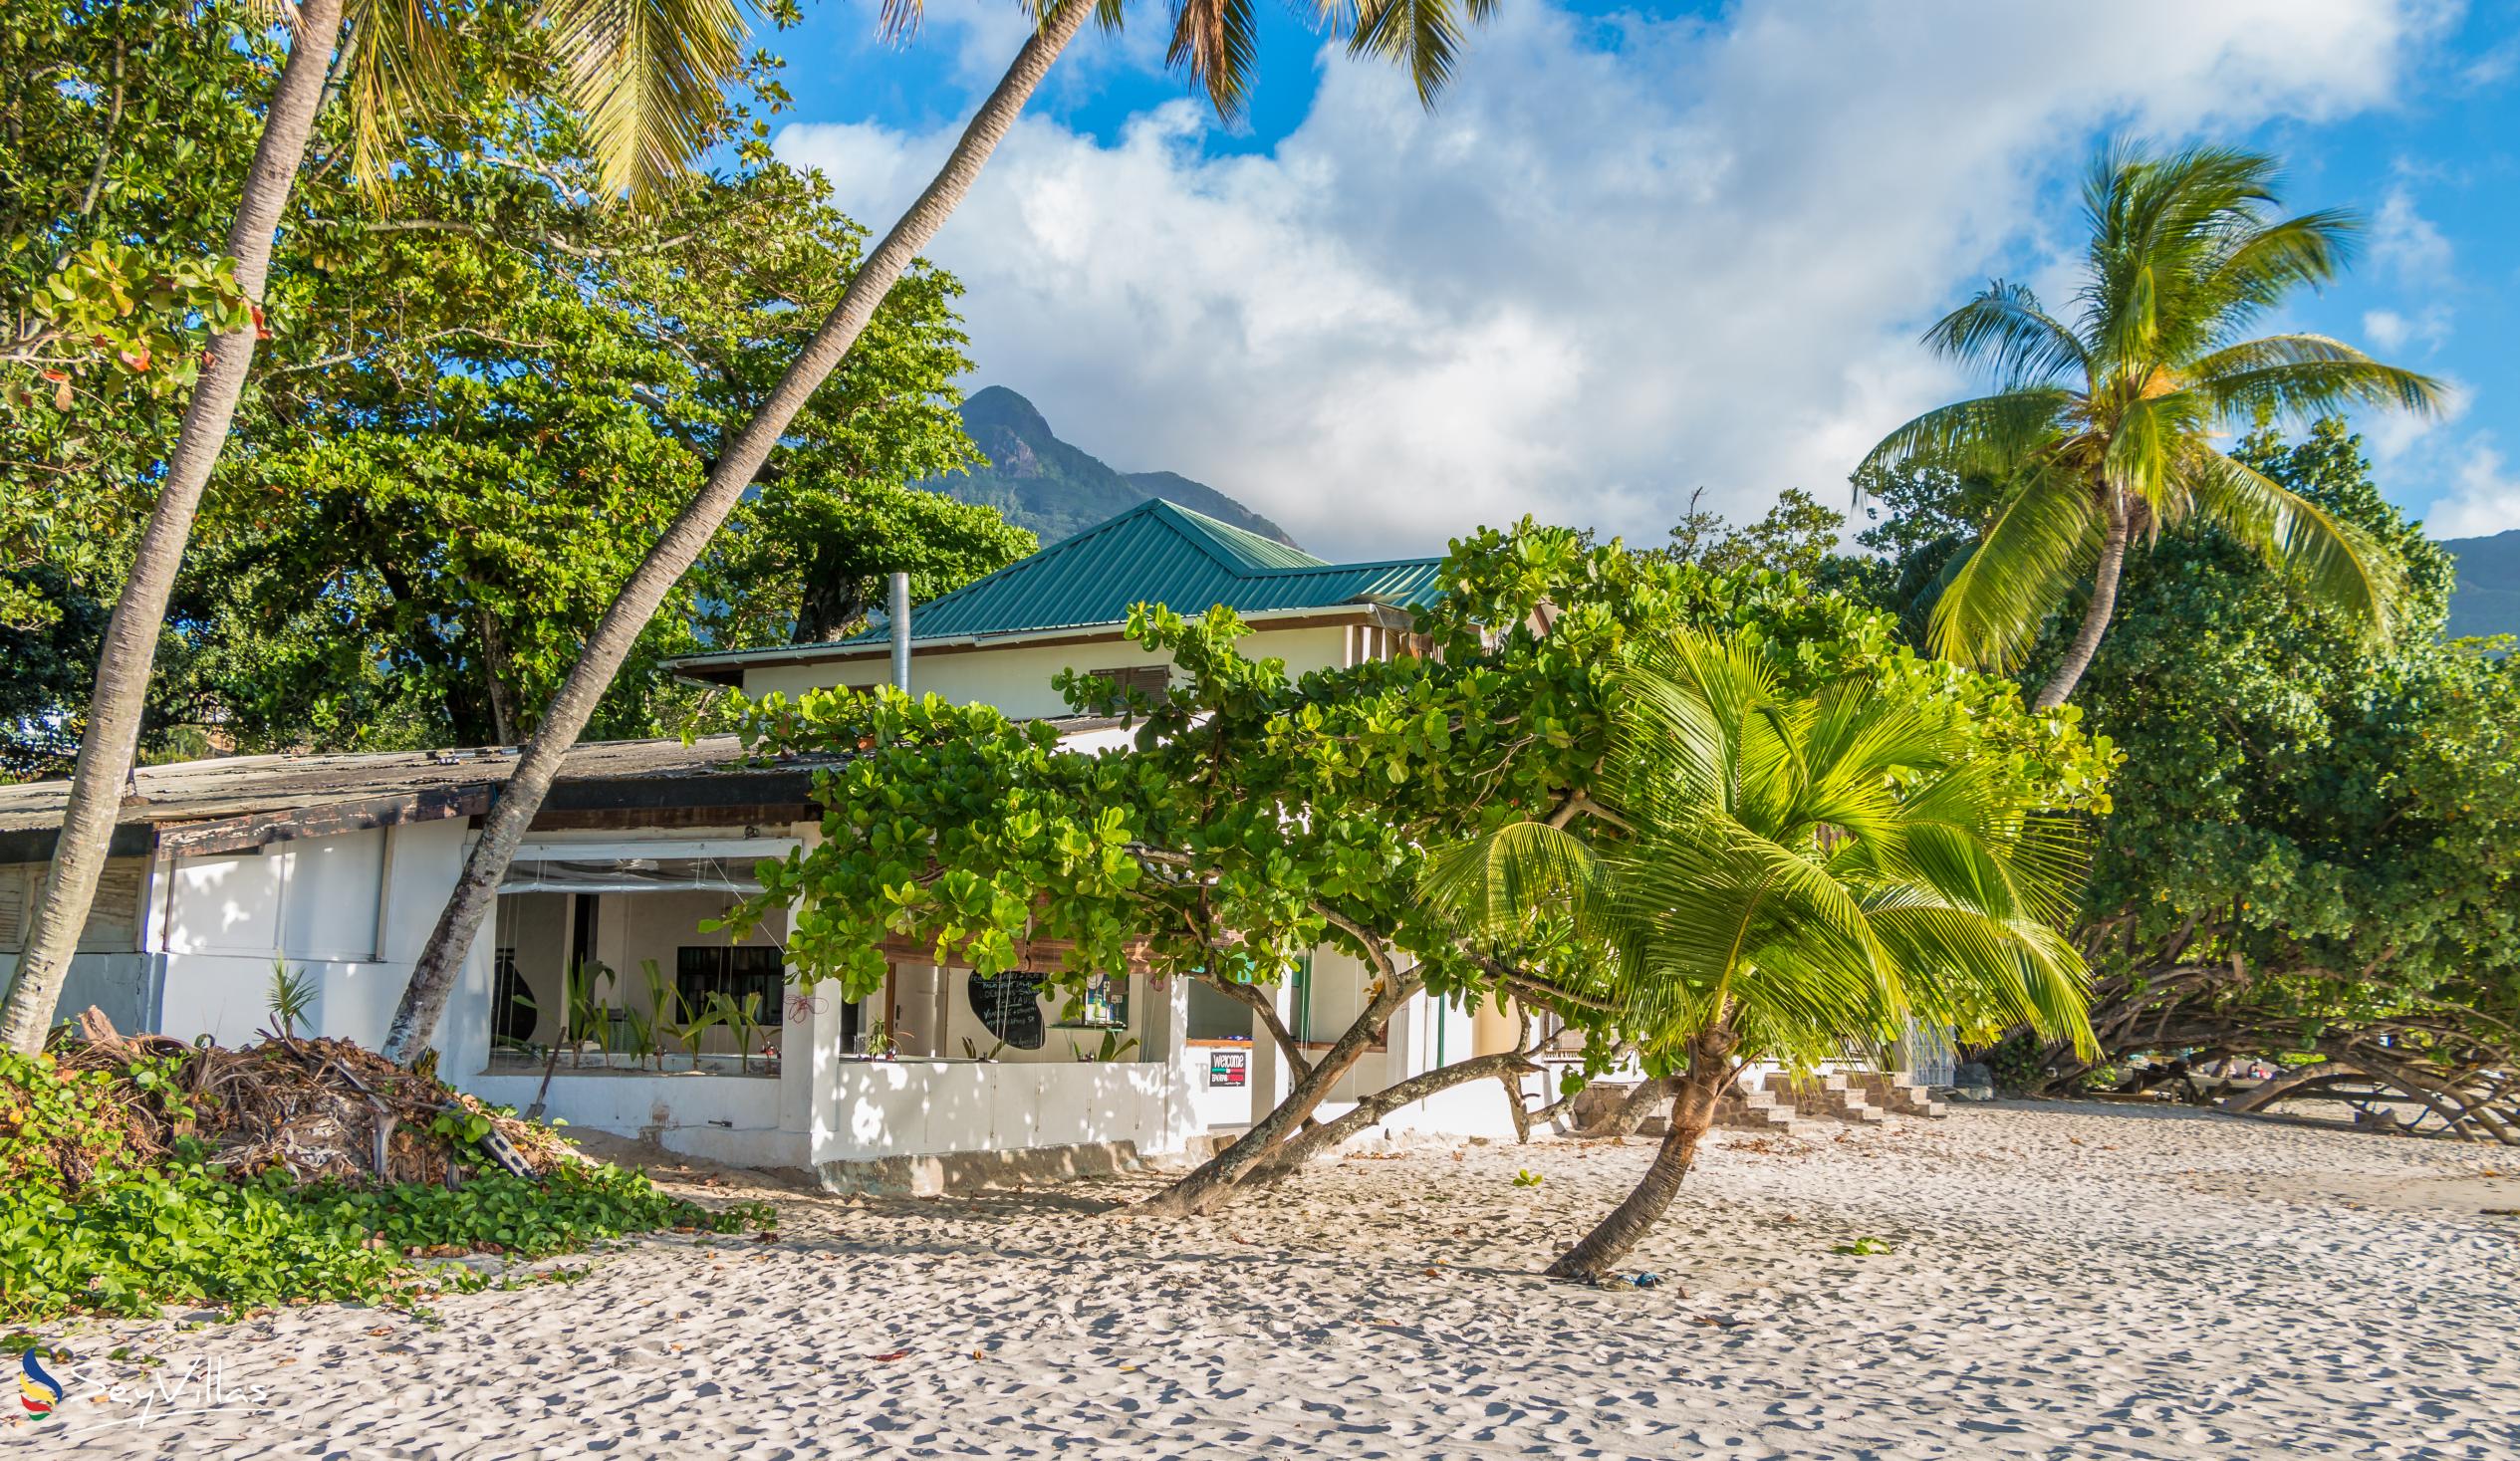 Foto 17: Villa Roscia - Strände - Mahé (Seychellen)